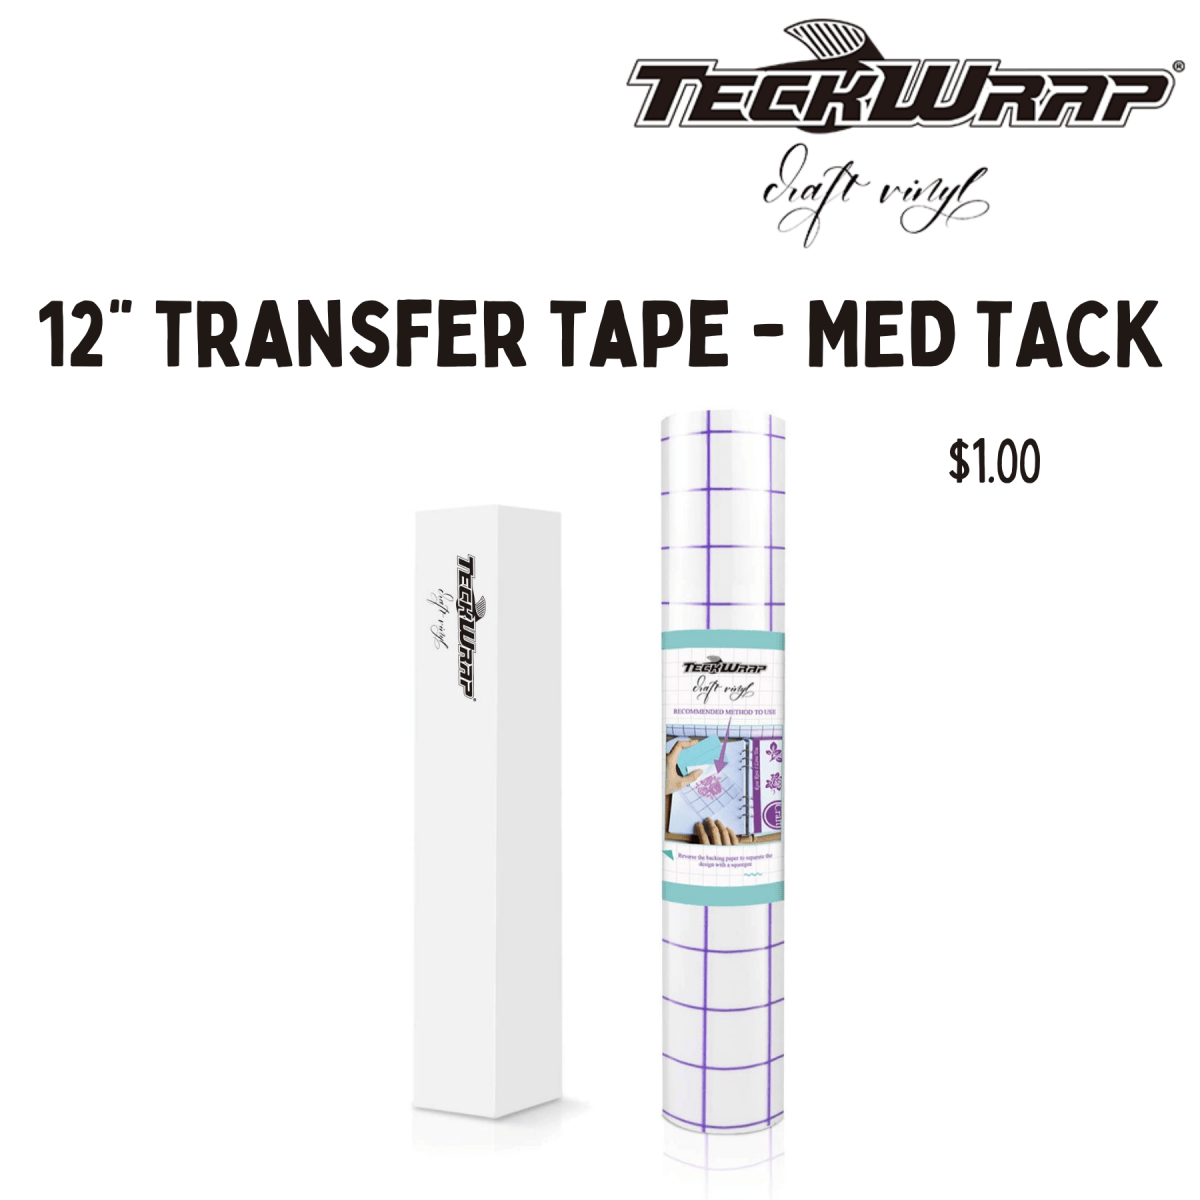 12" TECKWRAP TRANSFER TAPE - MEDIUM TACK - ADHESIVE